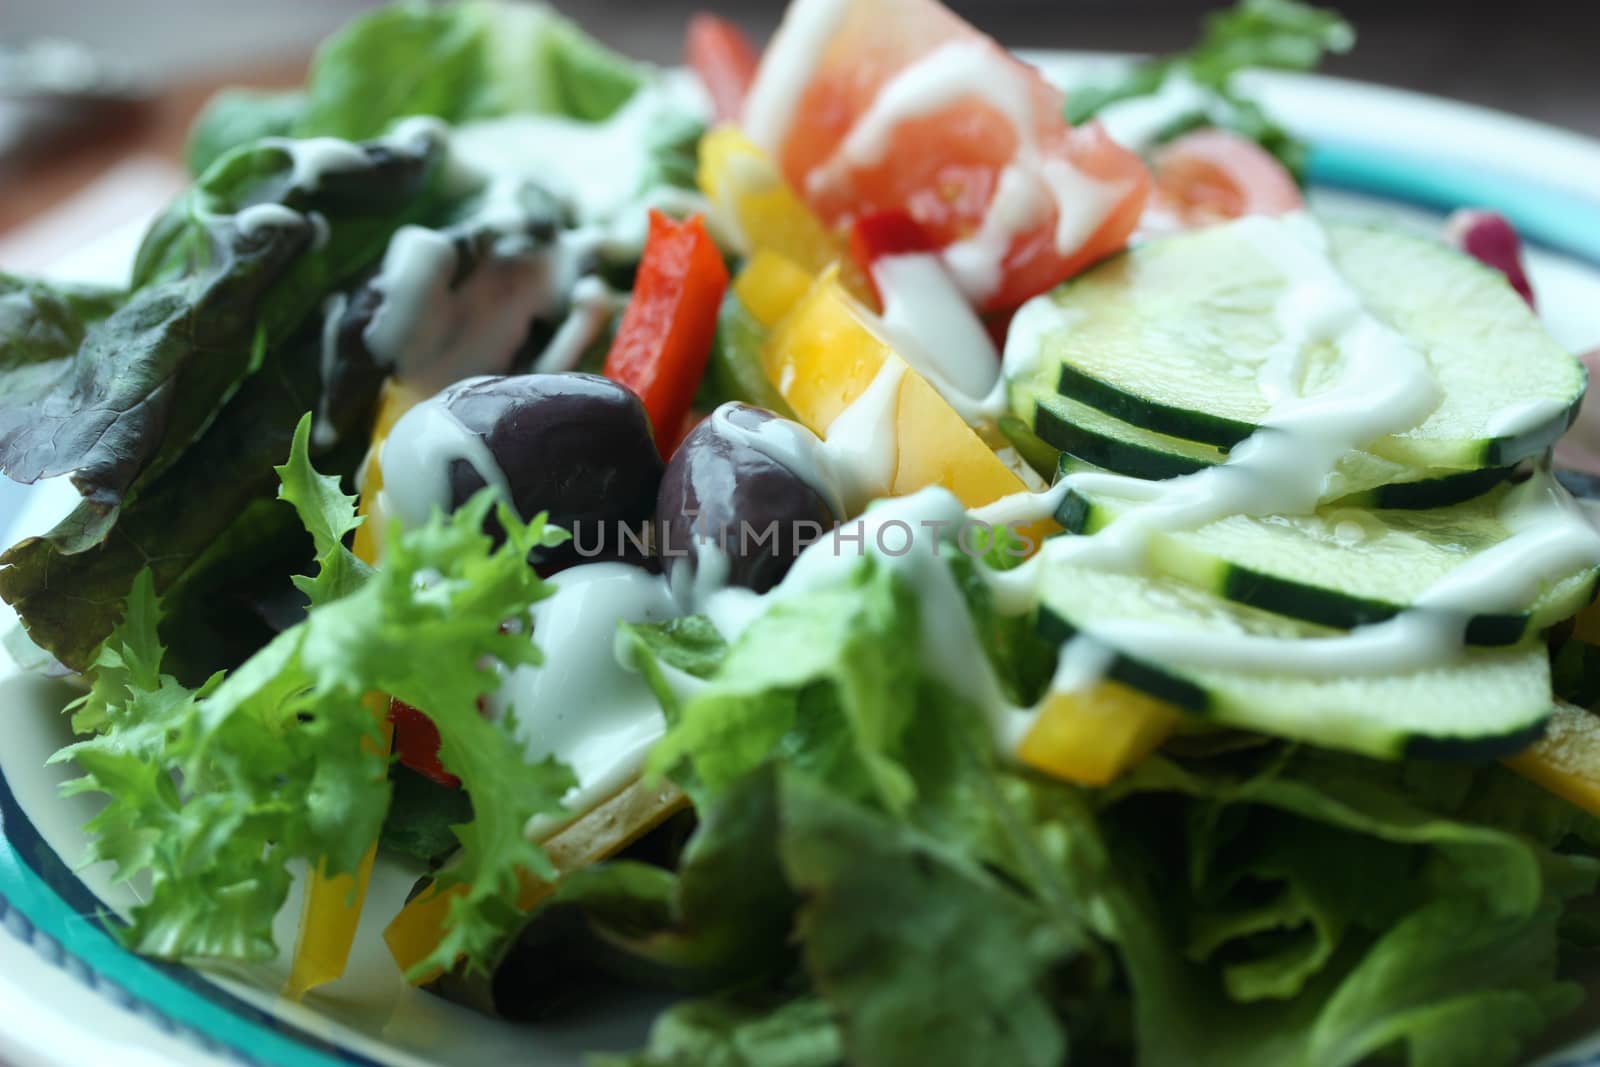 Plate of fresh green salad